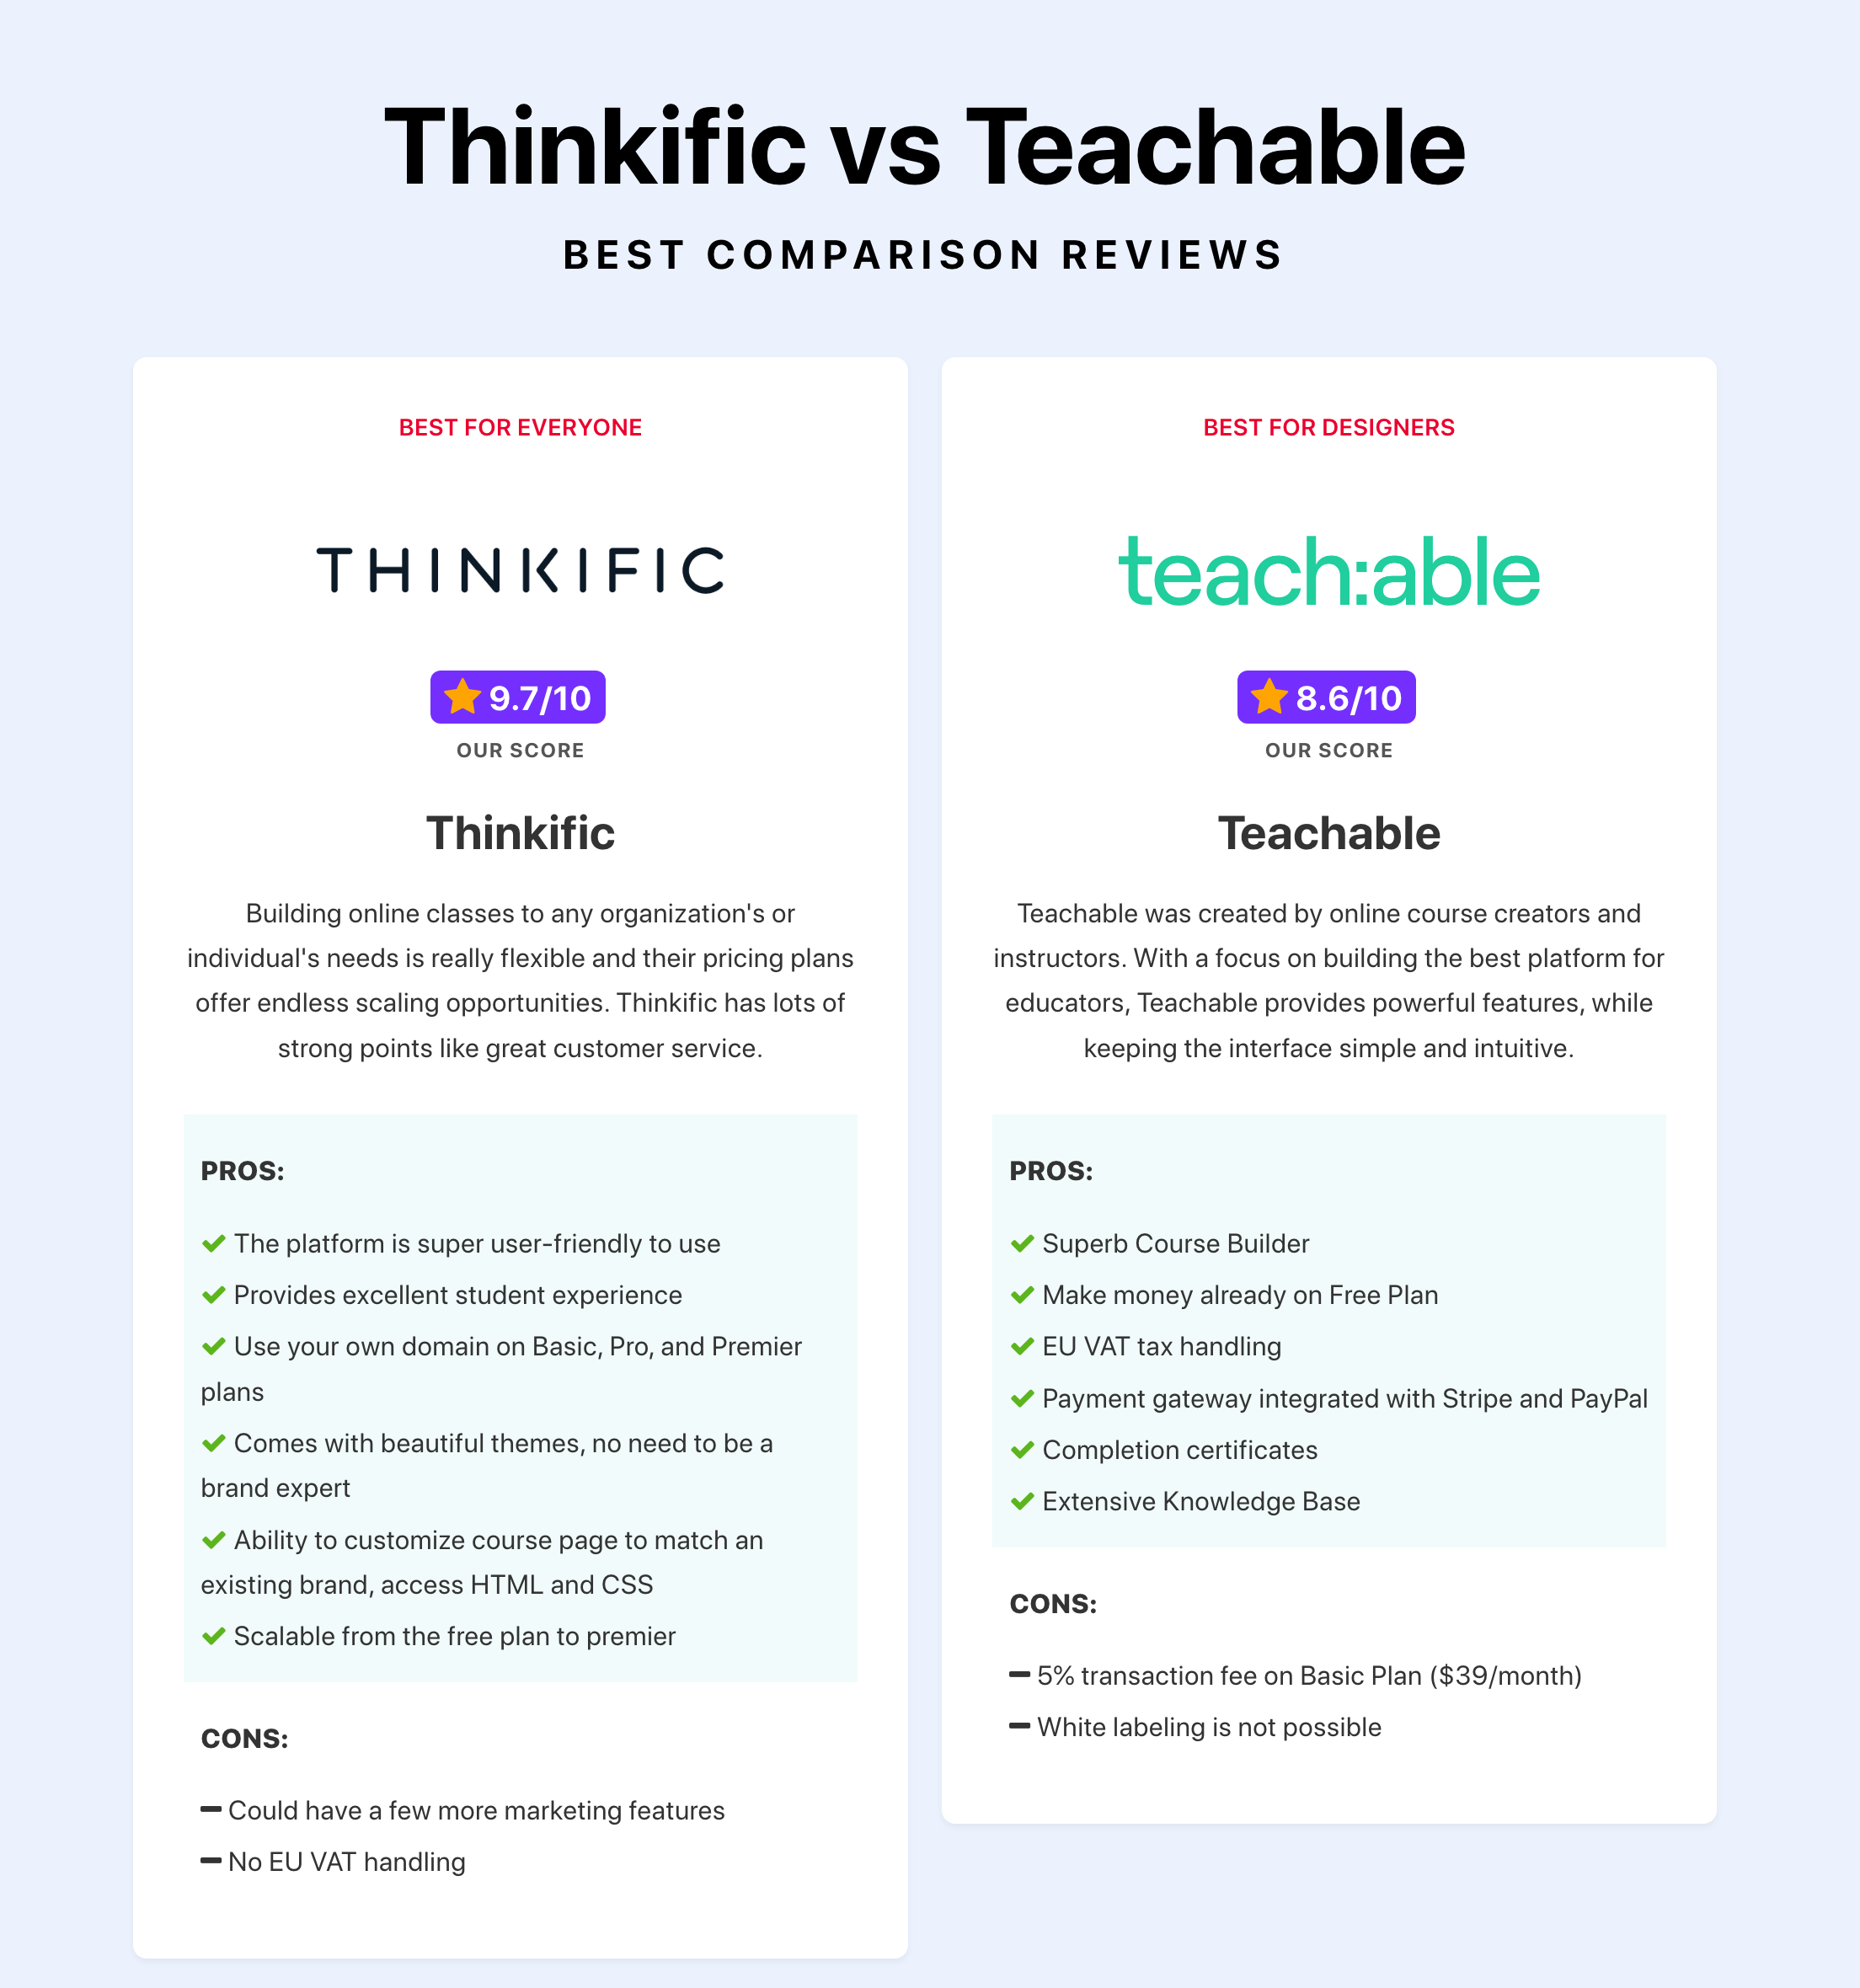 Thinkific vs Teachable Best Comparison Reviews Featured Image